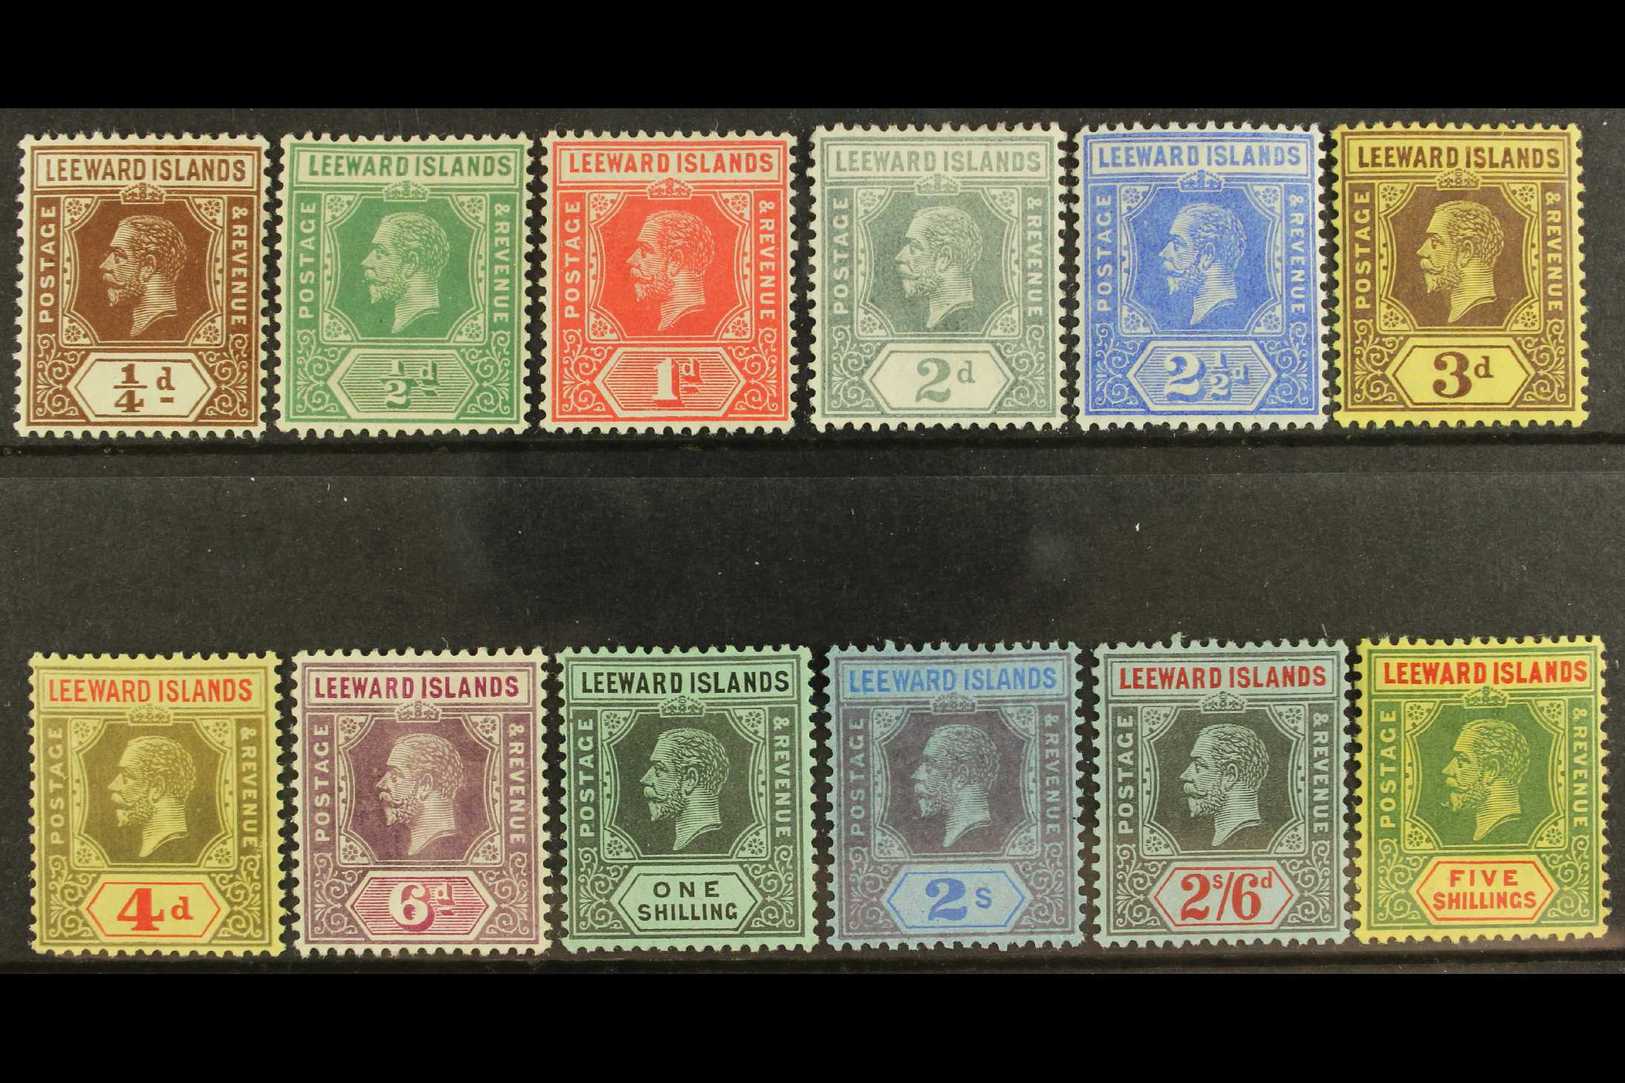 1912-22 Definitives Set Complete, SG 46/57, Very Fine Mint (12 Stamps) For More Images, Please Visit Http://www.sandafay - Leeward  Islands